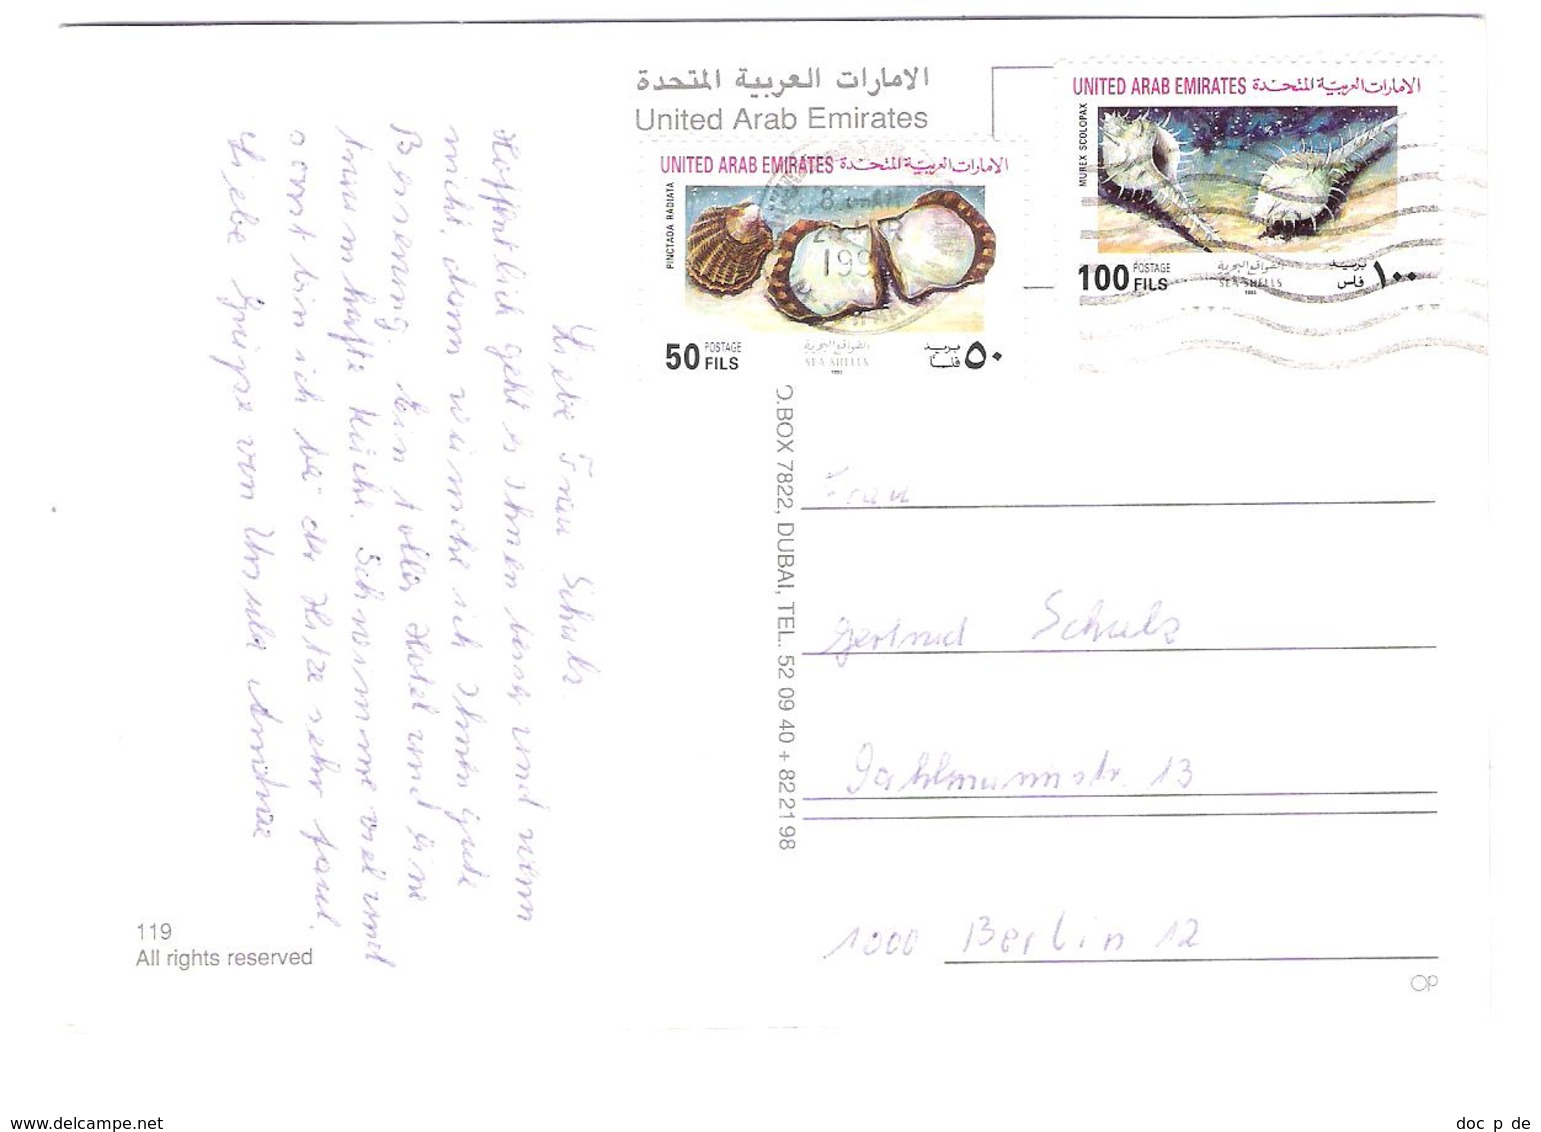 United Arab Emirates - Nice Shell Stamps - Ver. Arab. Emirate